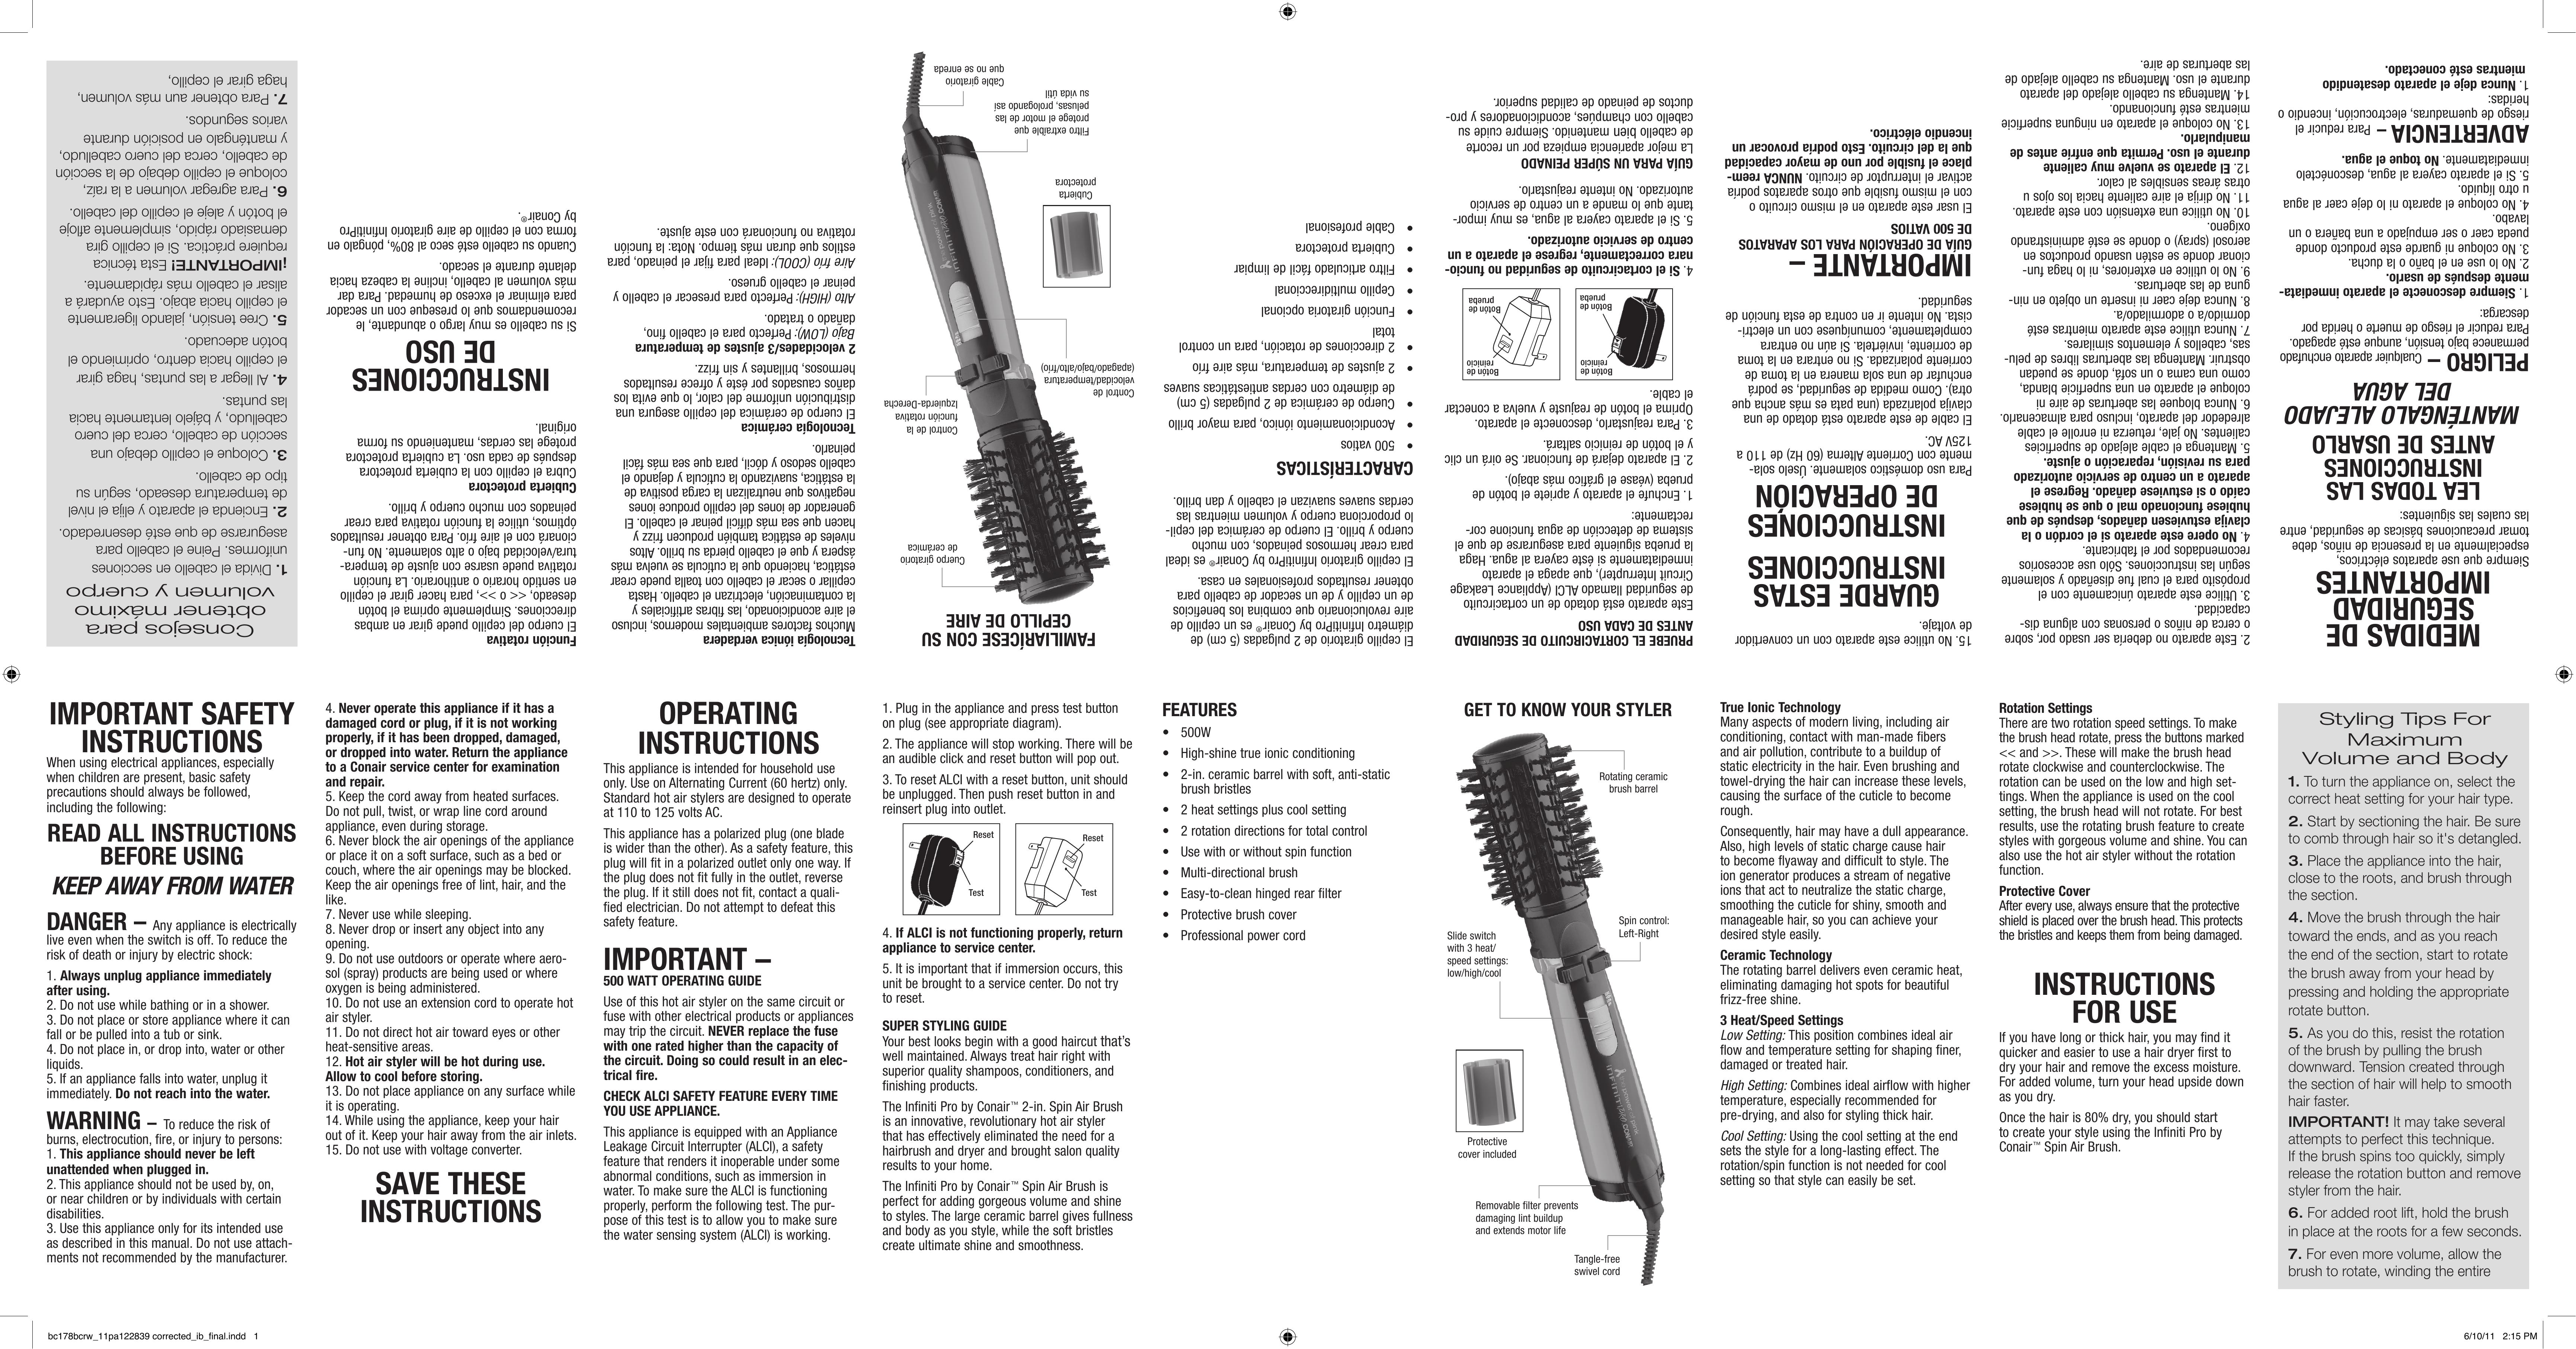 Conair BC178BCRW Hair Dryer User Manual